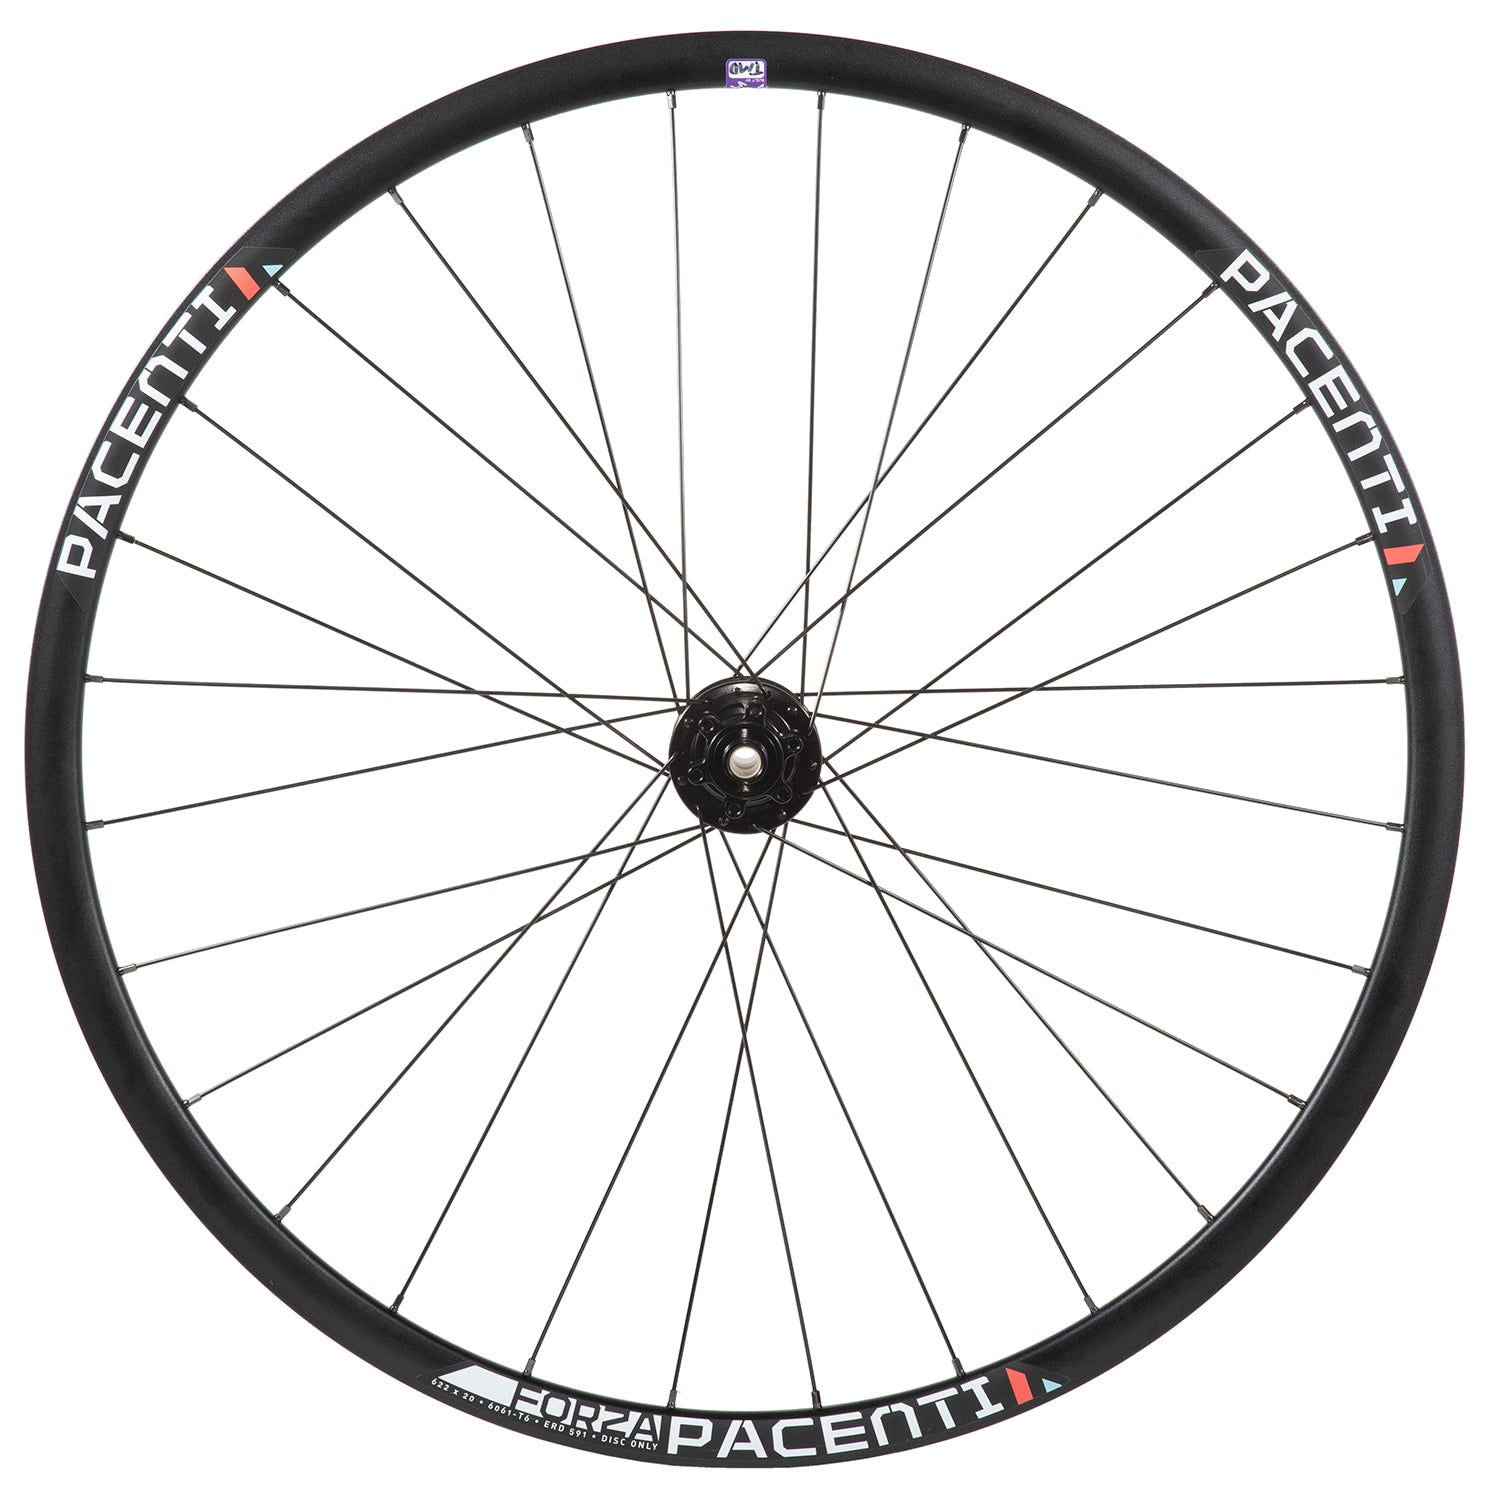 GORILLA SPUN Build Wheel [PACENTI FORZA x VELOCITY RaceDisc SRAM X11]